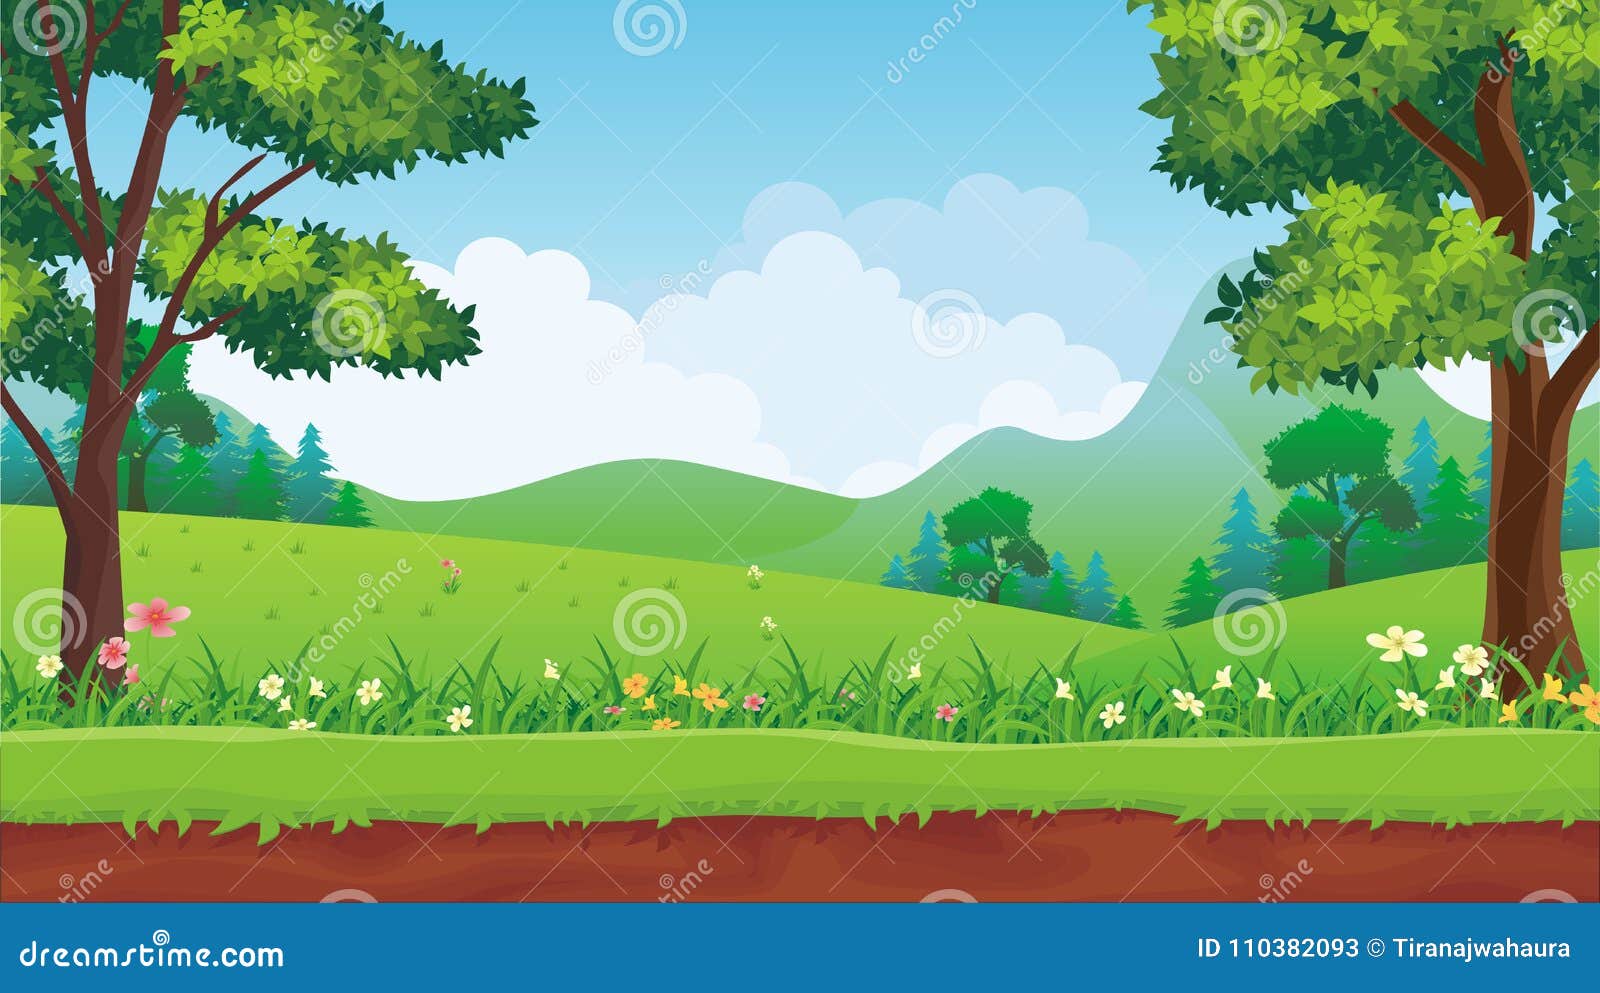 Lovely Cartoon Nature Landscape Background Stock Vector - Illustration